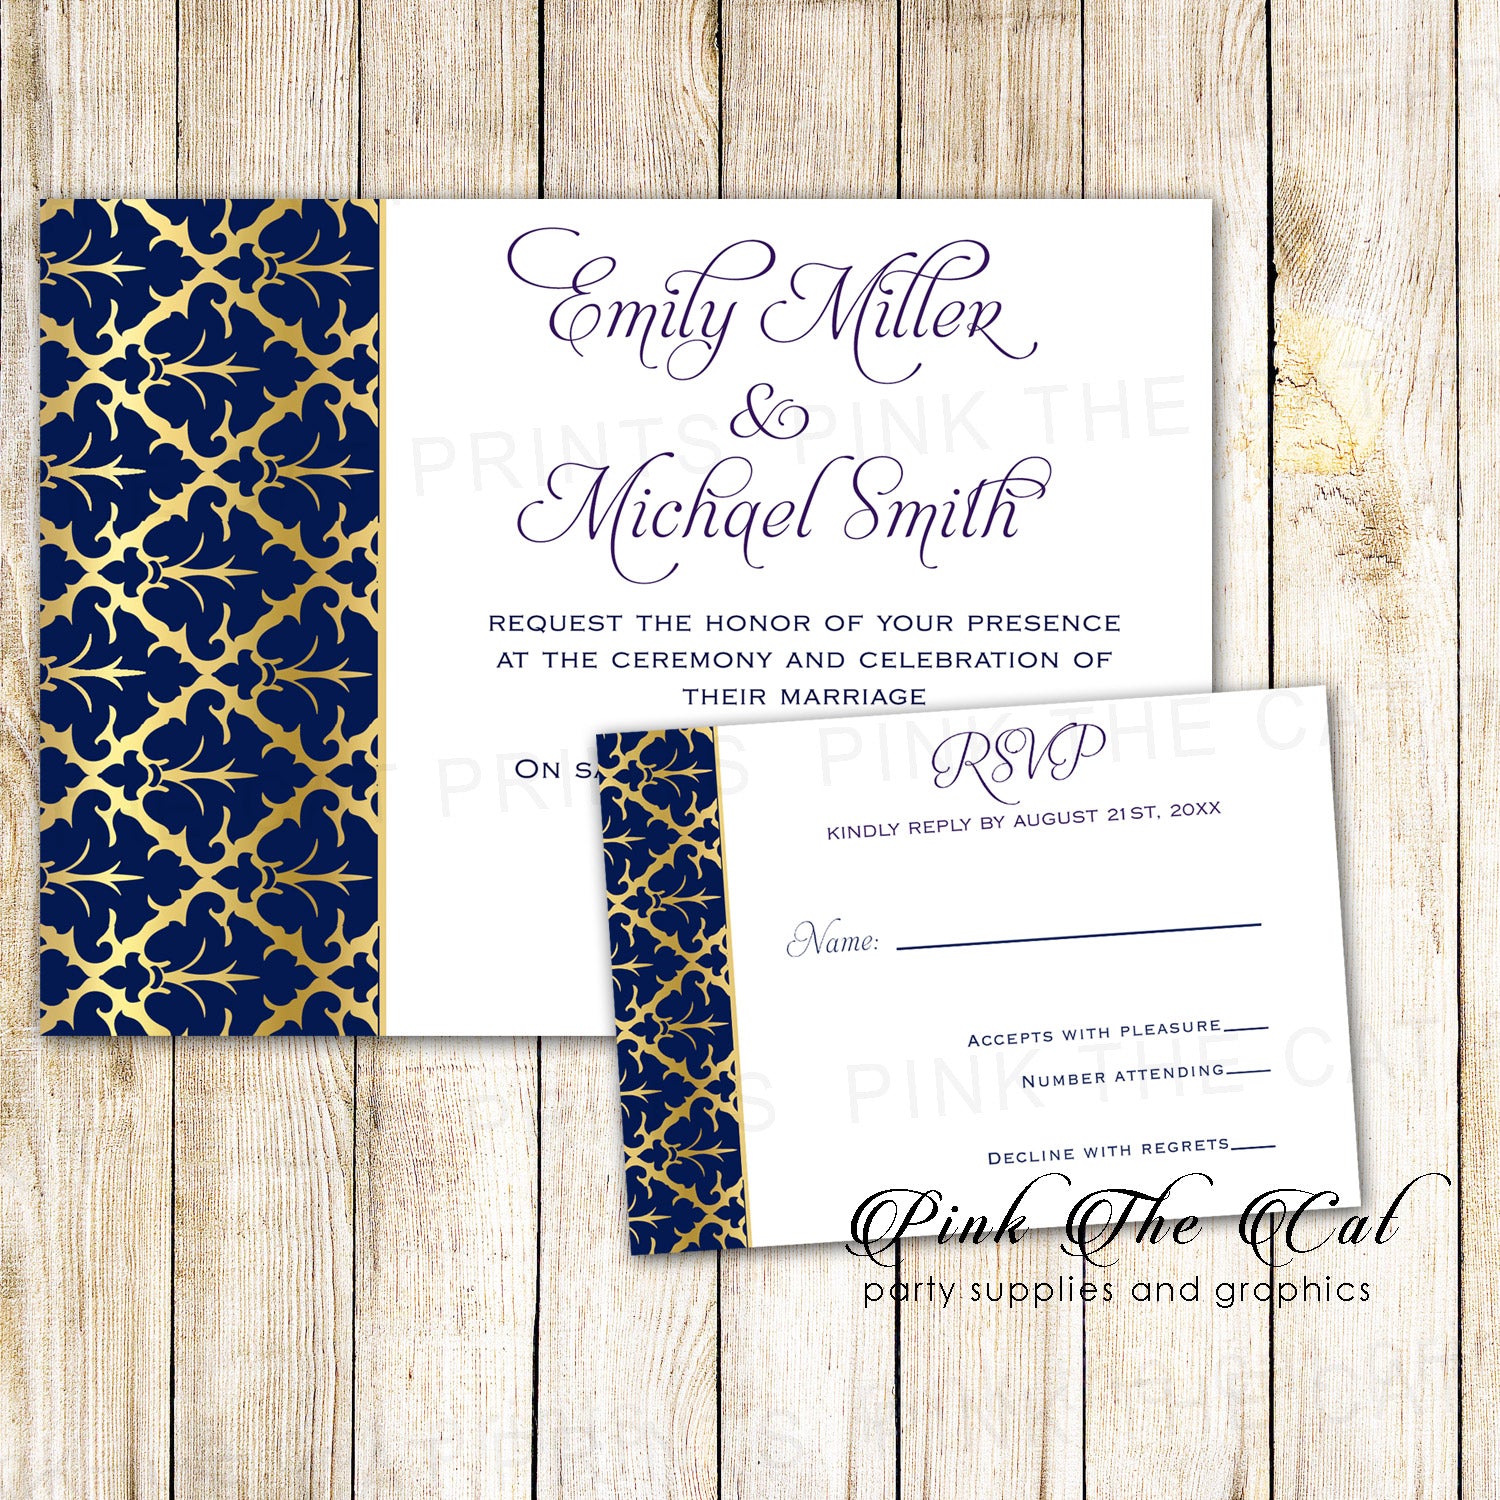 Wedding invitations navy blue gold & response cards printable